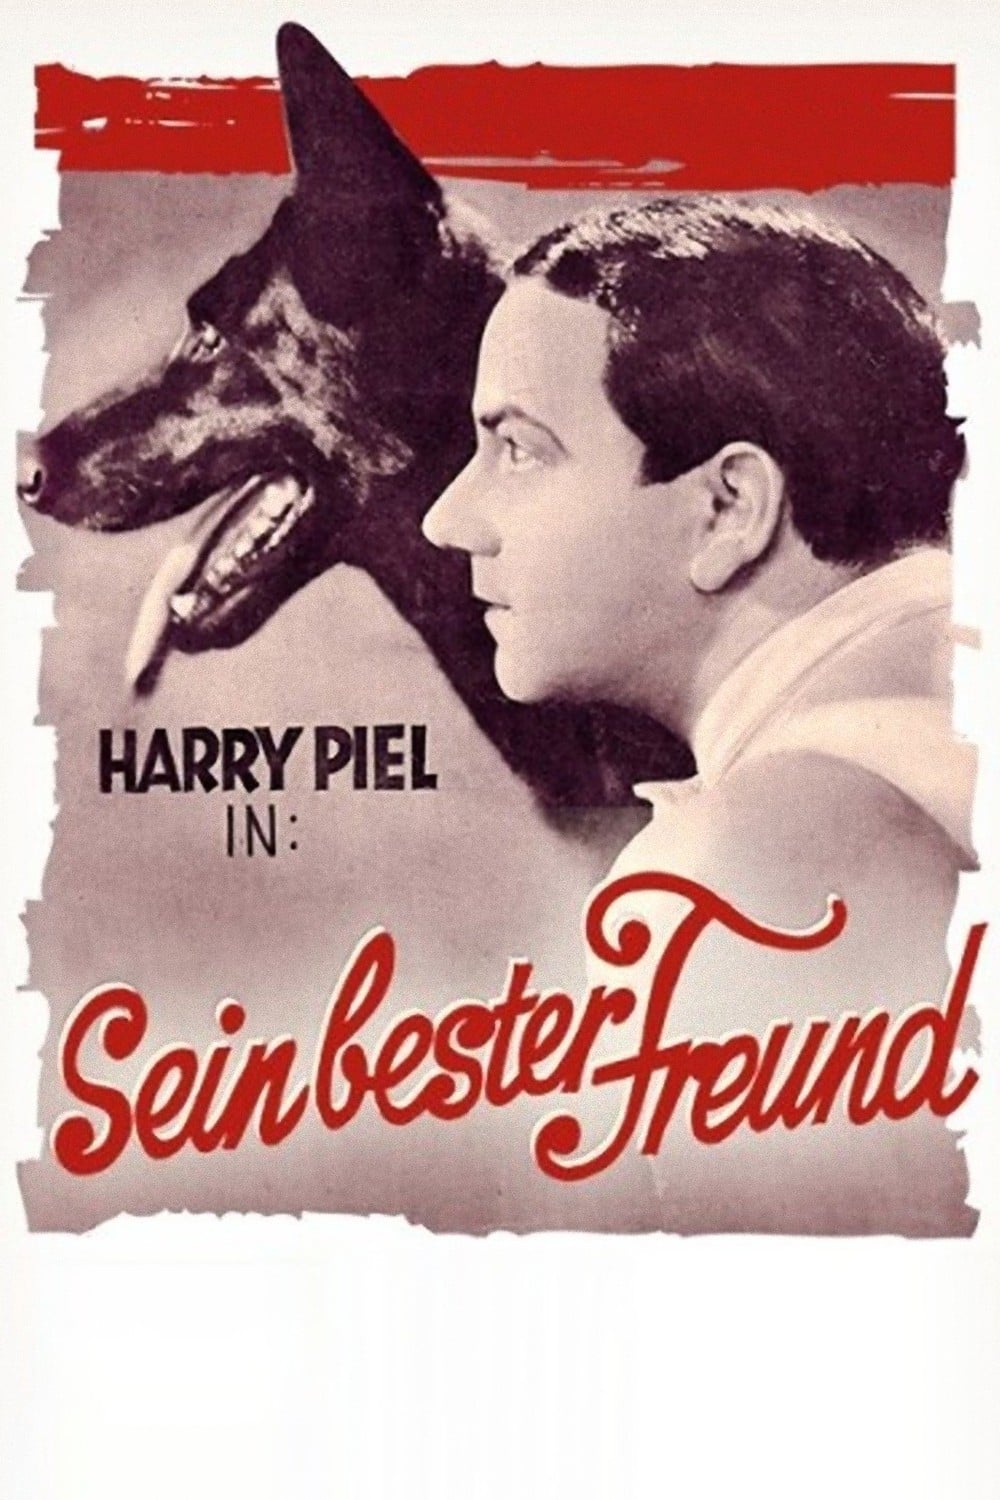 His Best Friend (1937)